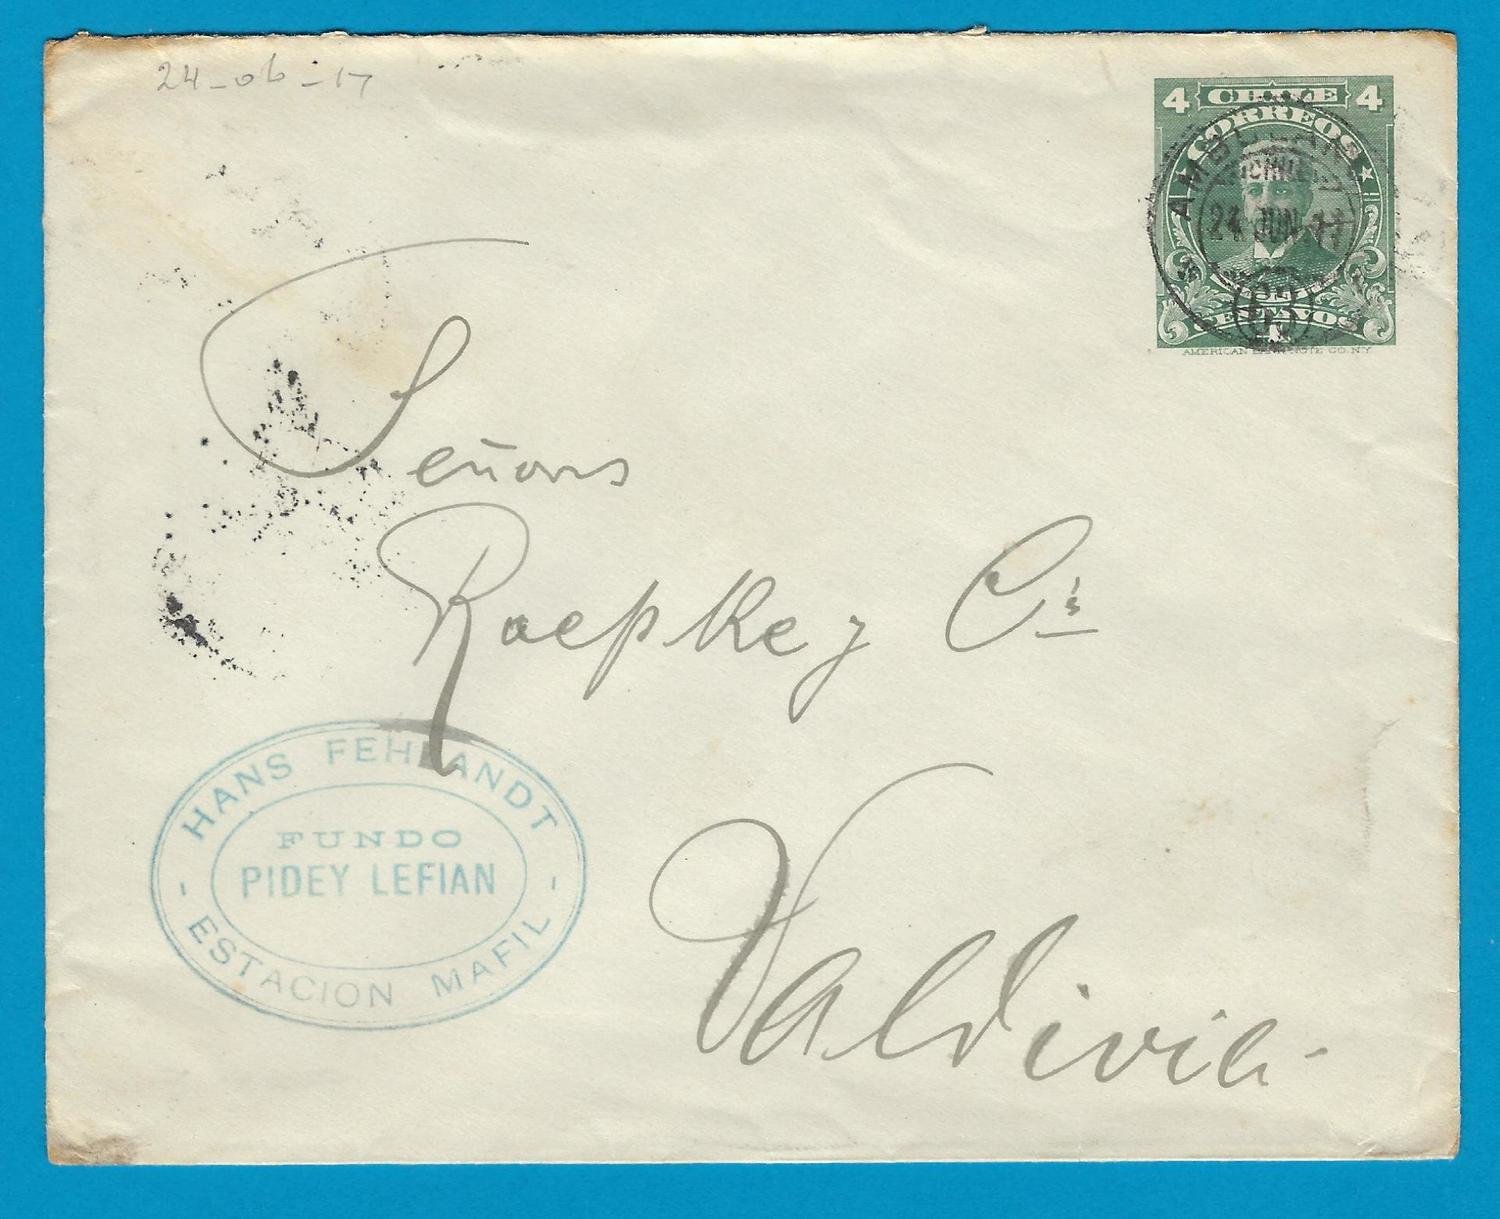 CHILE postal envelope 1917 Est Mafil with Ambulancia 63